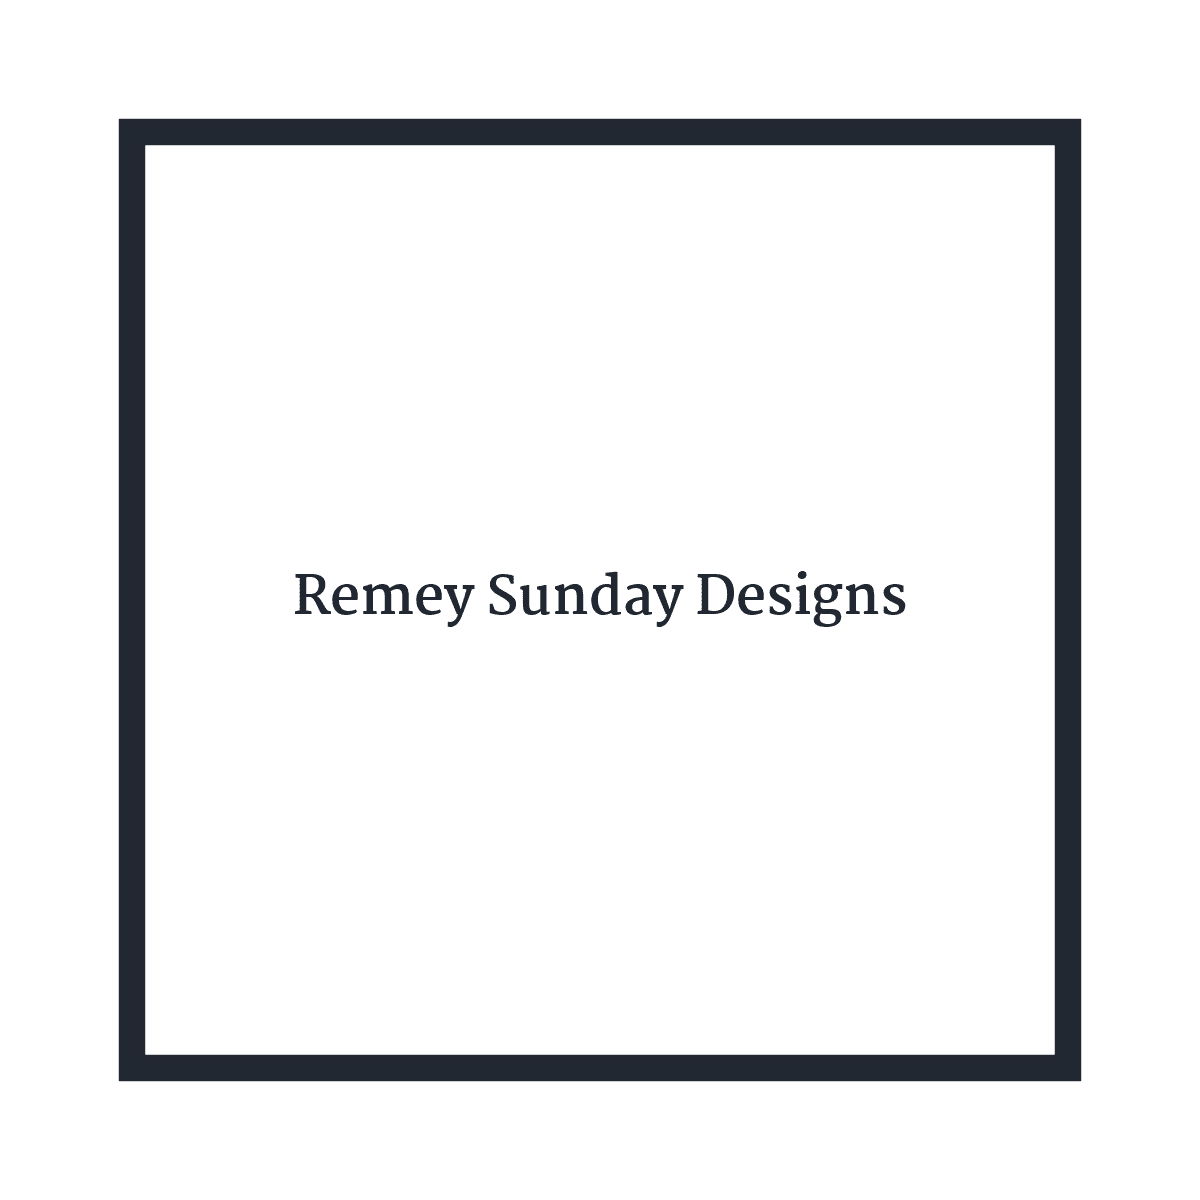 Remey Sunday Designs